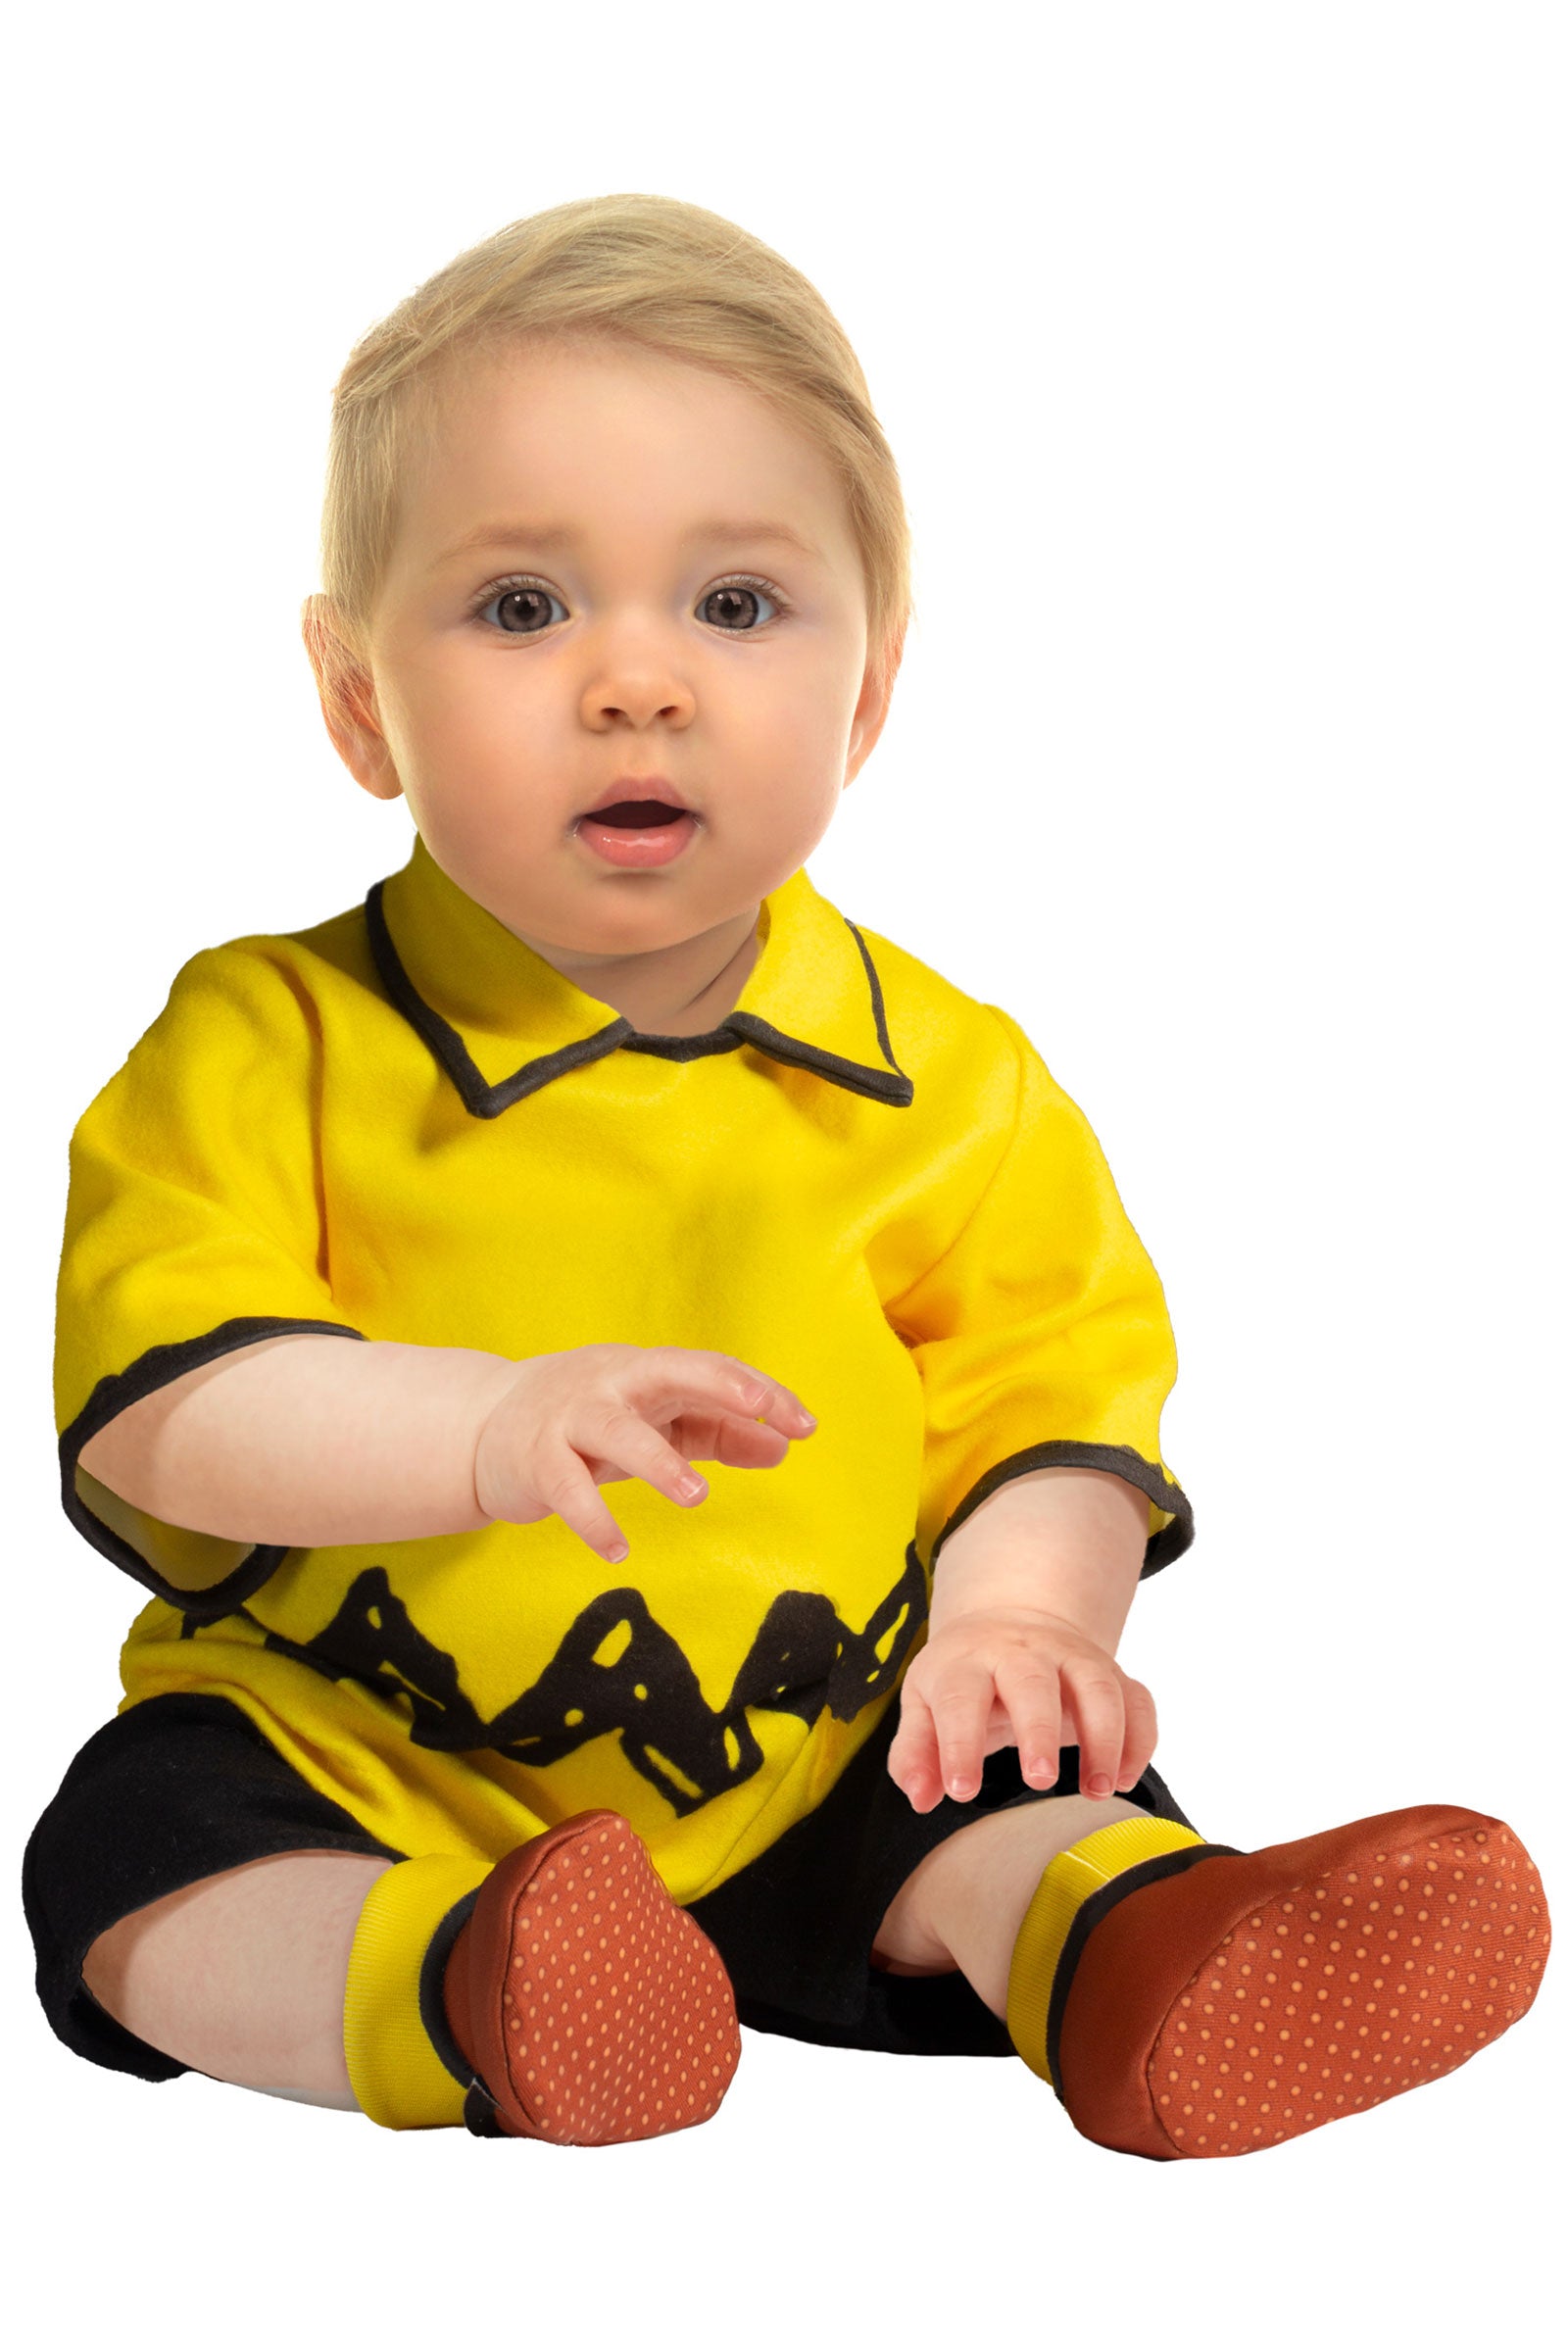 Charlie Brown Infant Costume